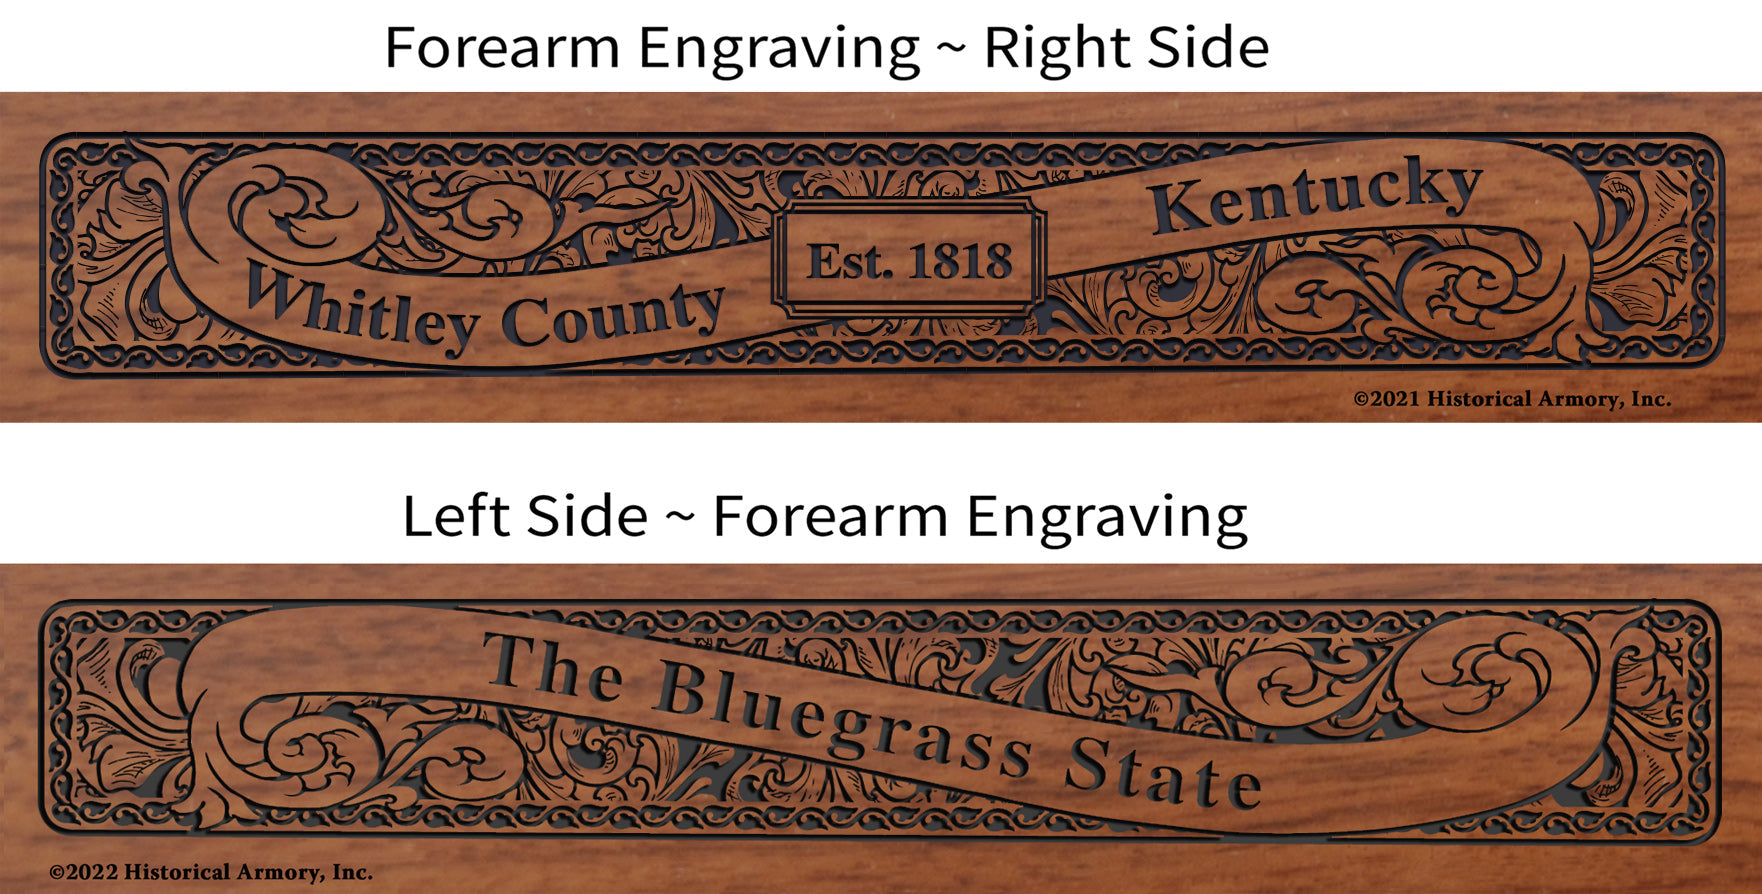 Whitley County Kentucky Engraved Rifle Forearm